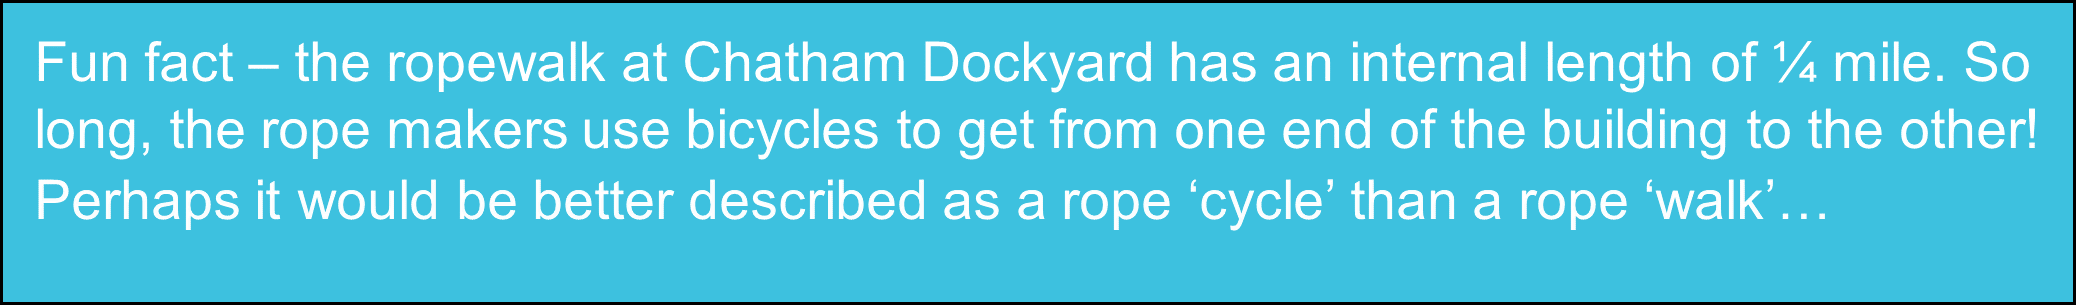 Fun fact about the ropewalk at Chatham Dockyard 